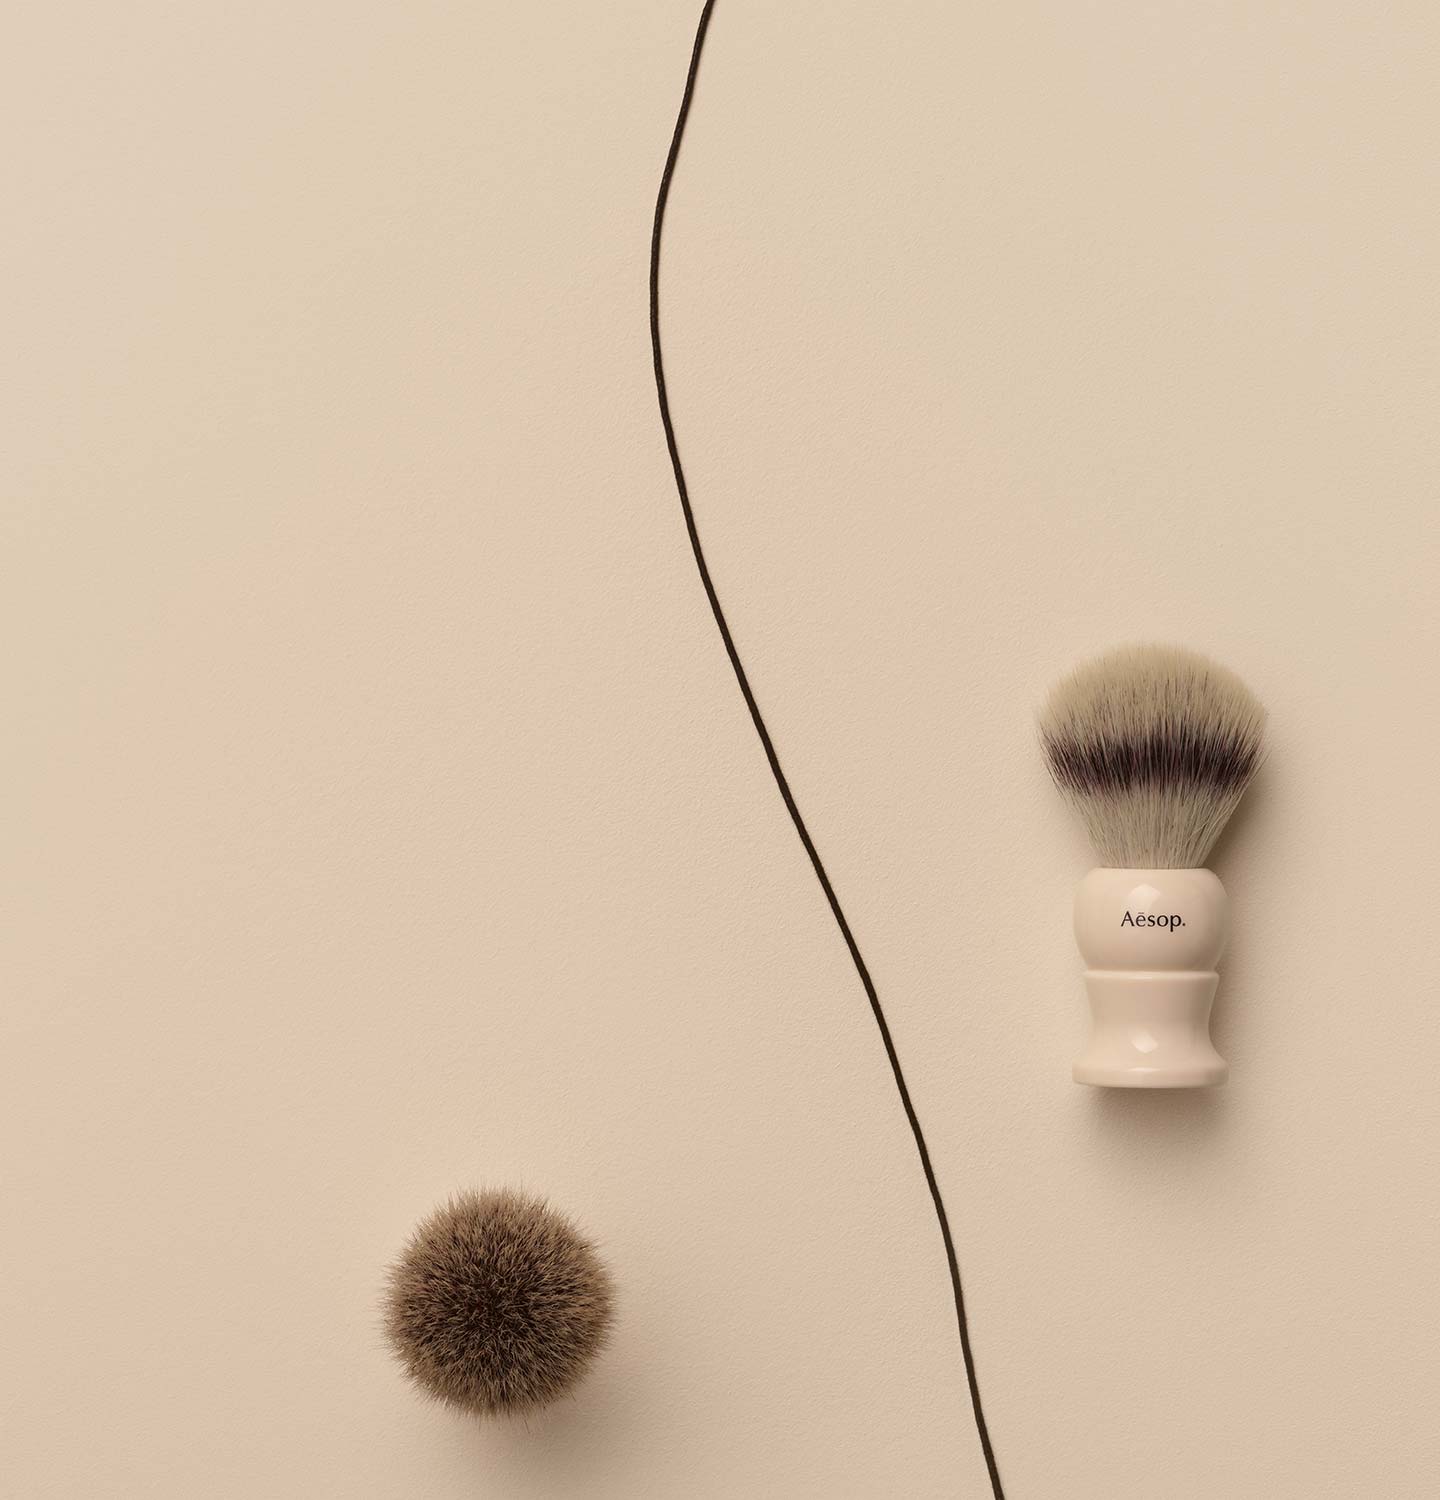 Aesop Shaving Brushes arranged alongside a dark string on a beige textured surface.